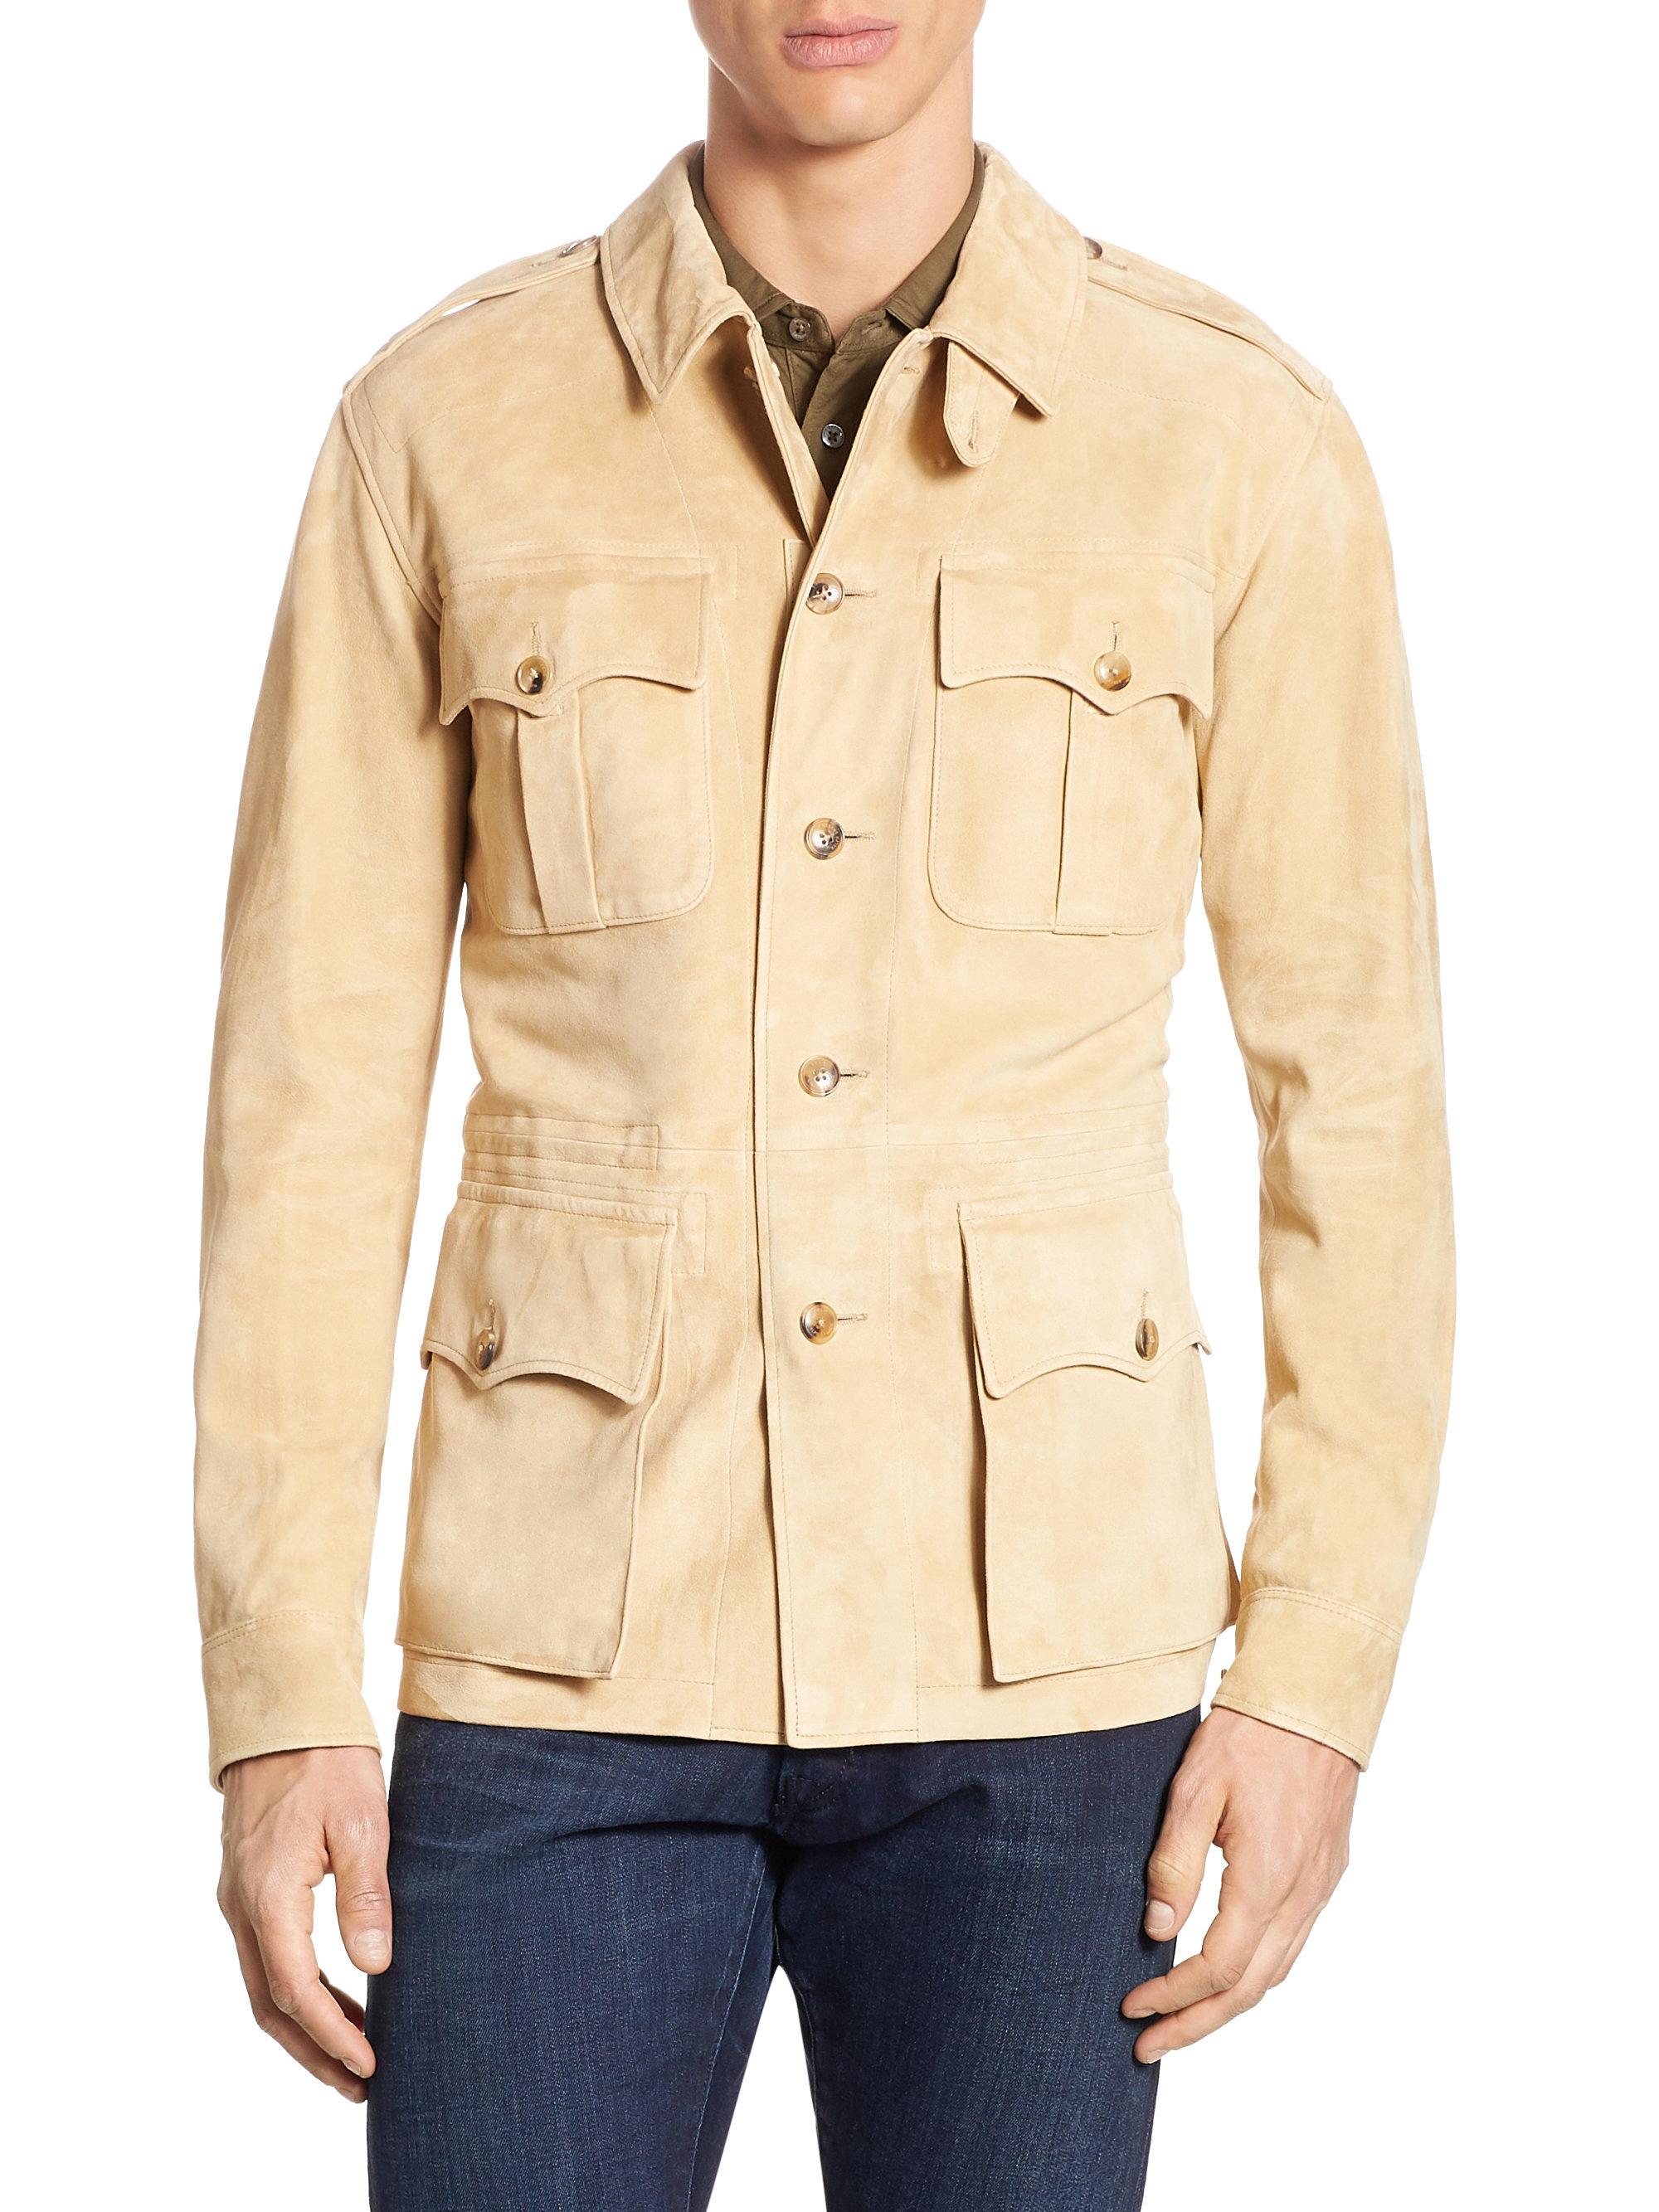 Polo Ralph Lauren Suede Safari Jacket in Natural for Men | Lyst